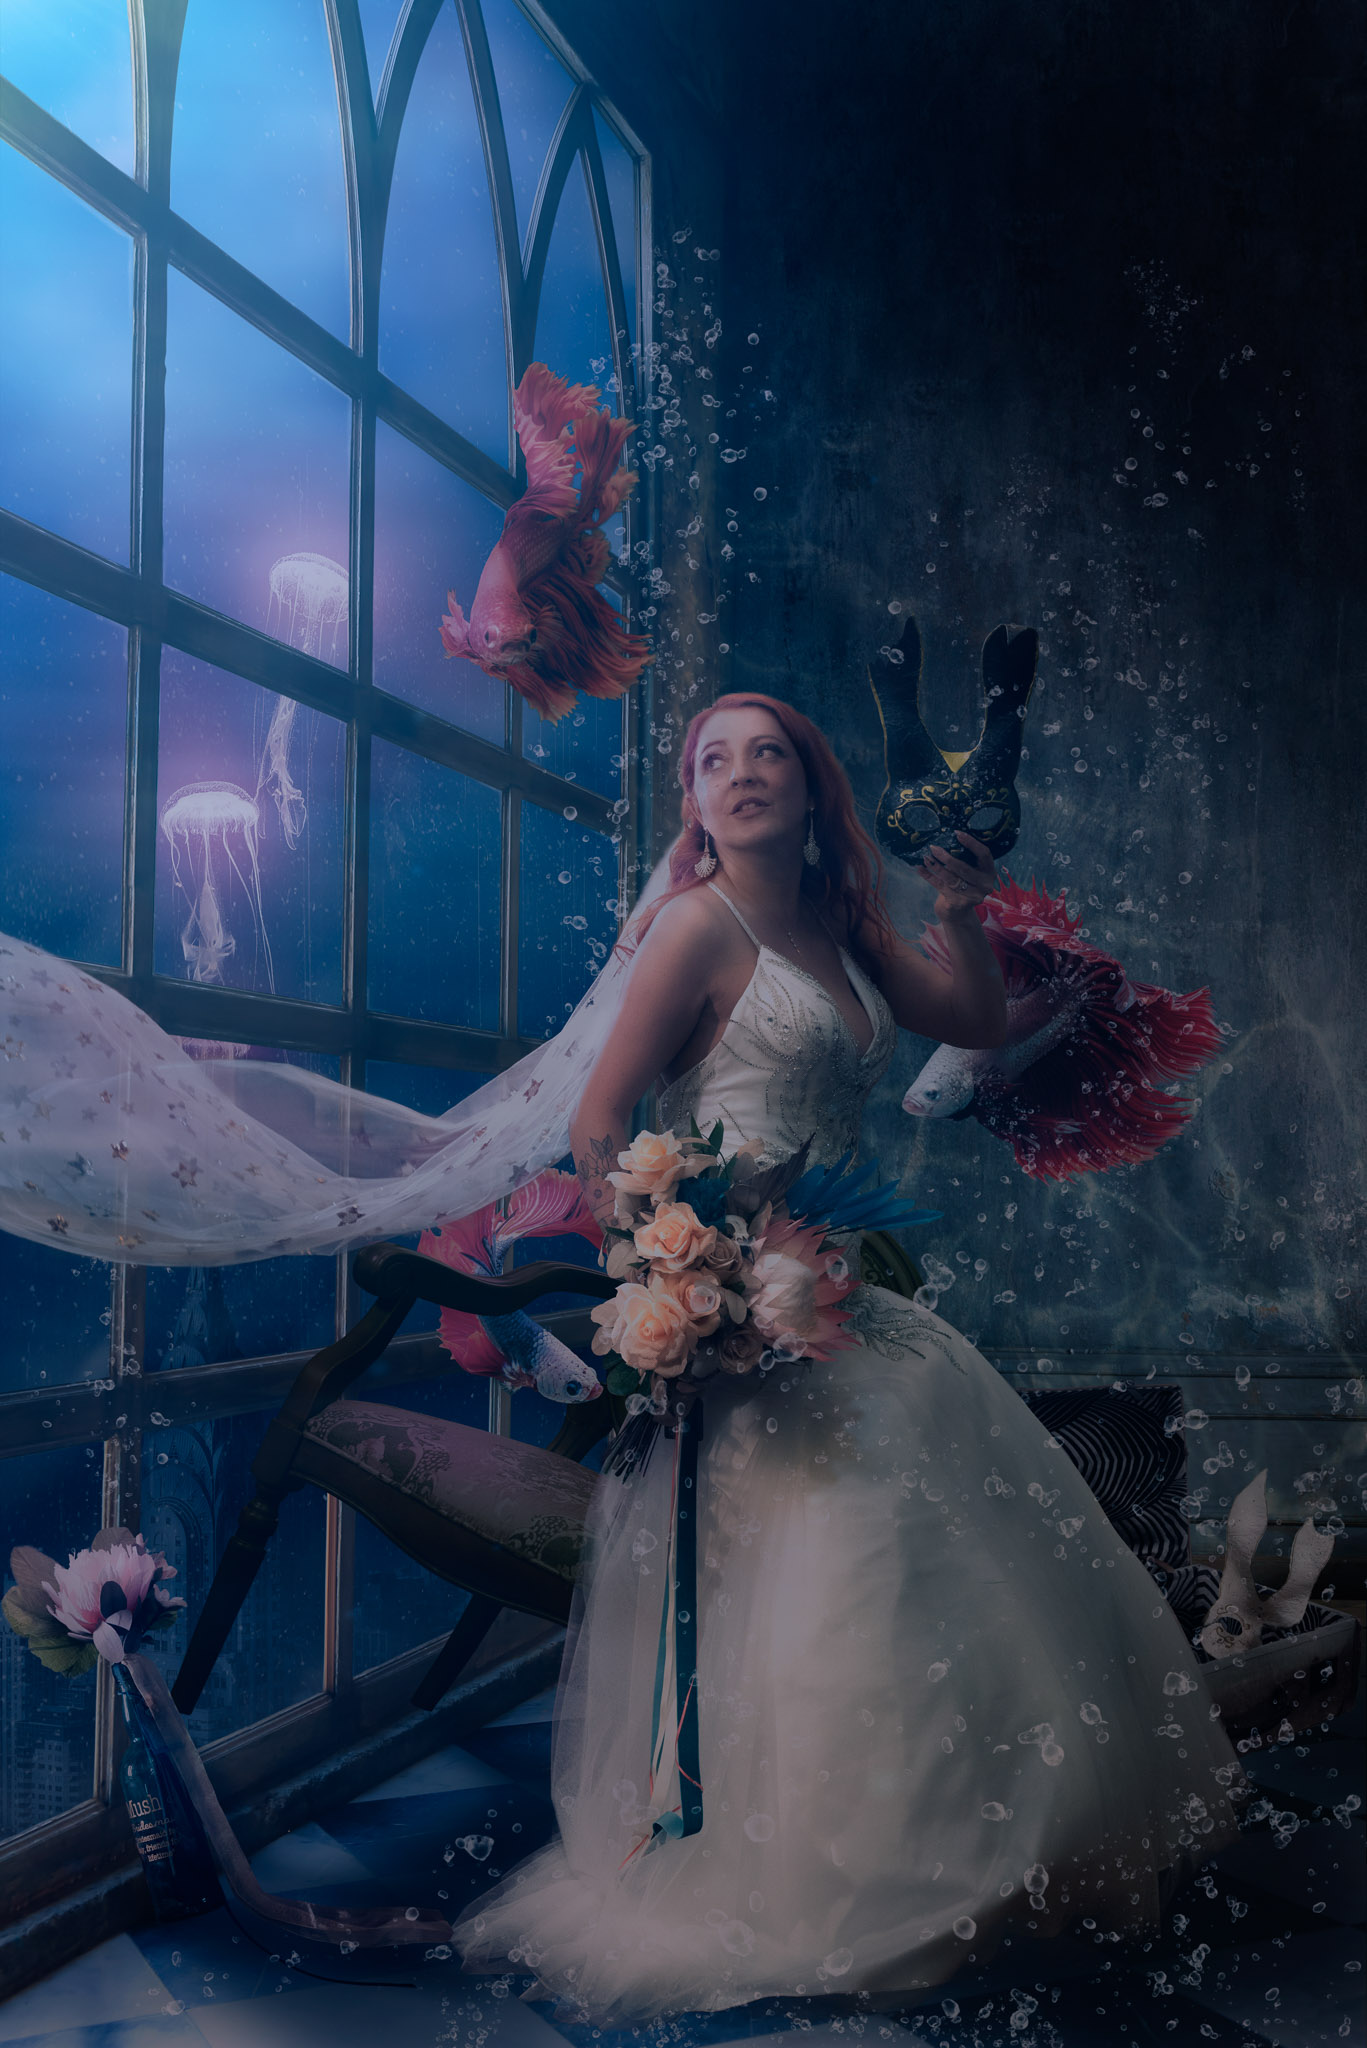 creative wedding art inspired by fantasy films AJT Images Warwickshire